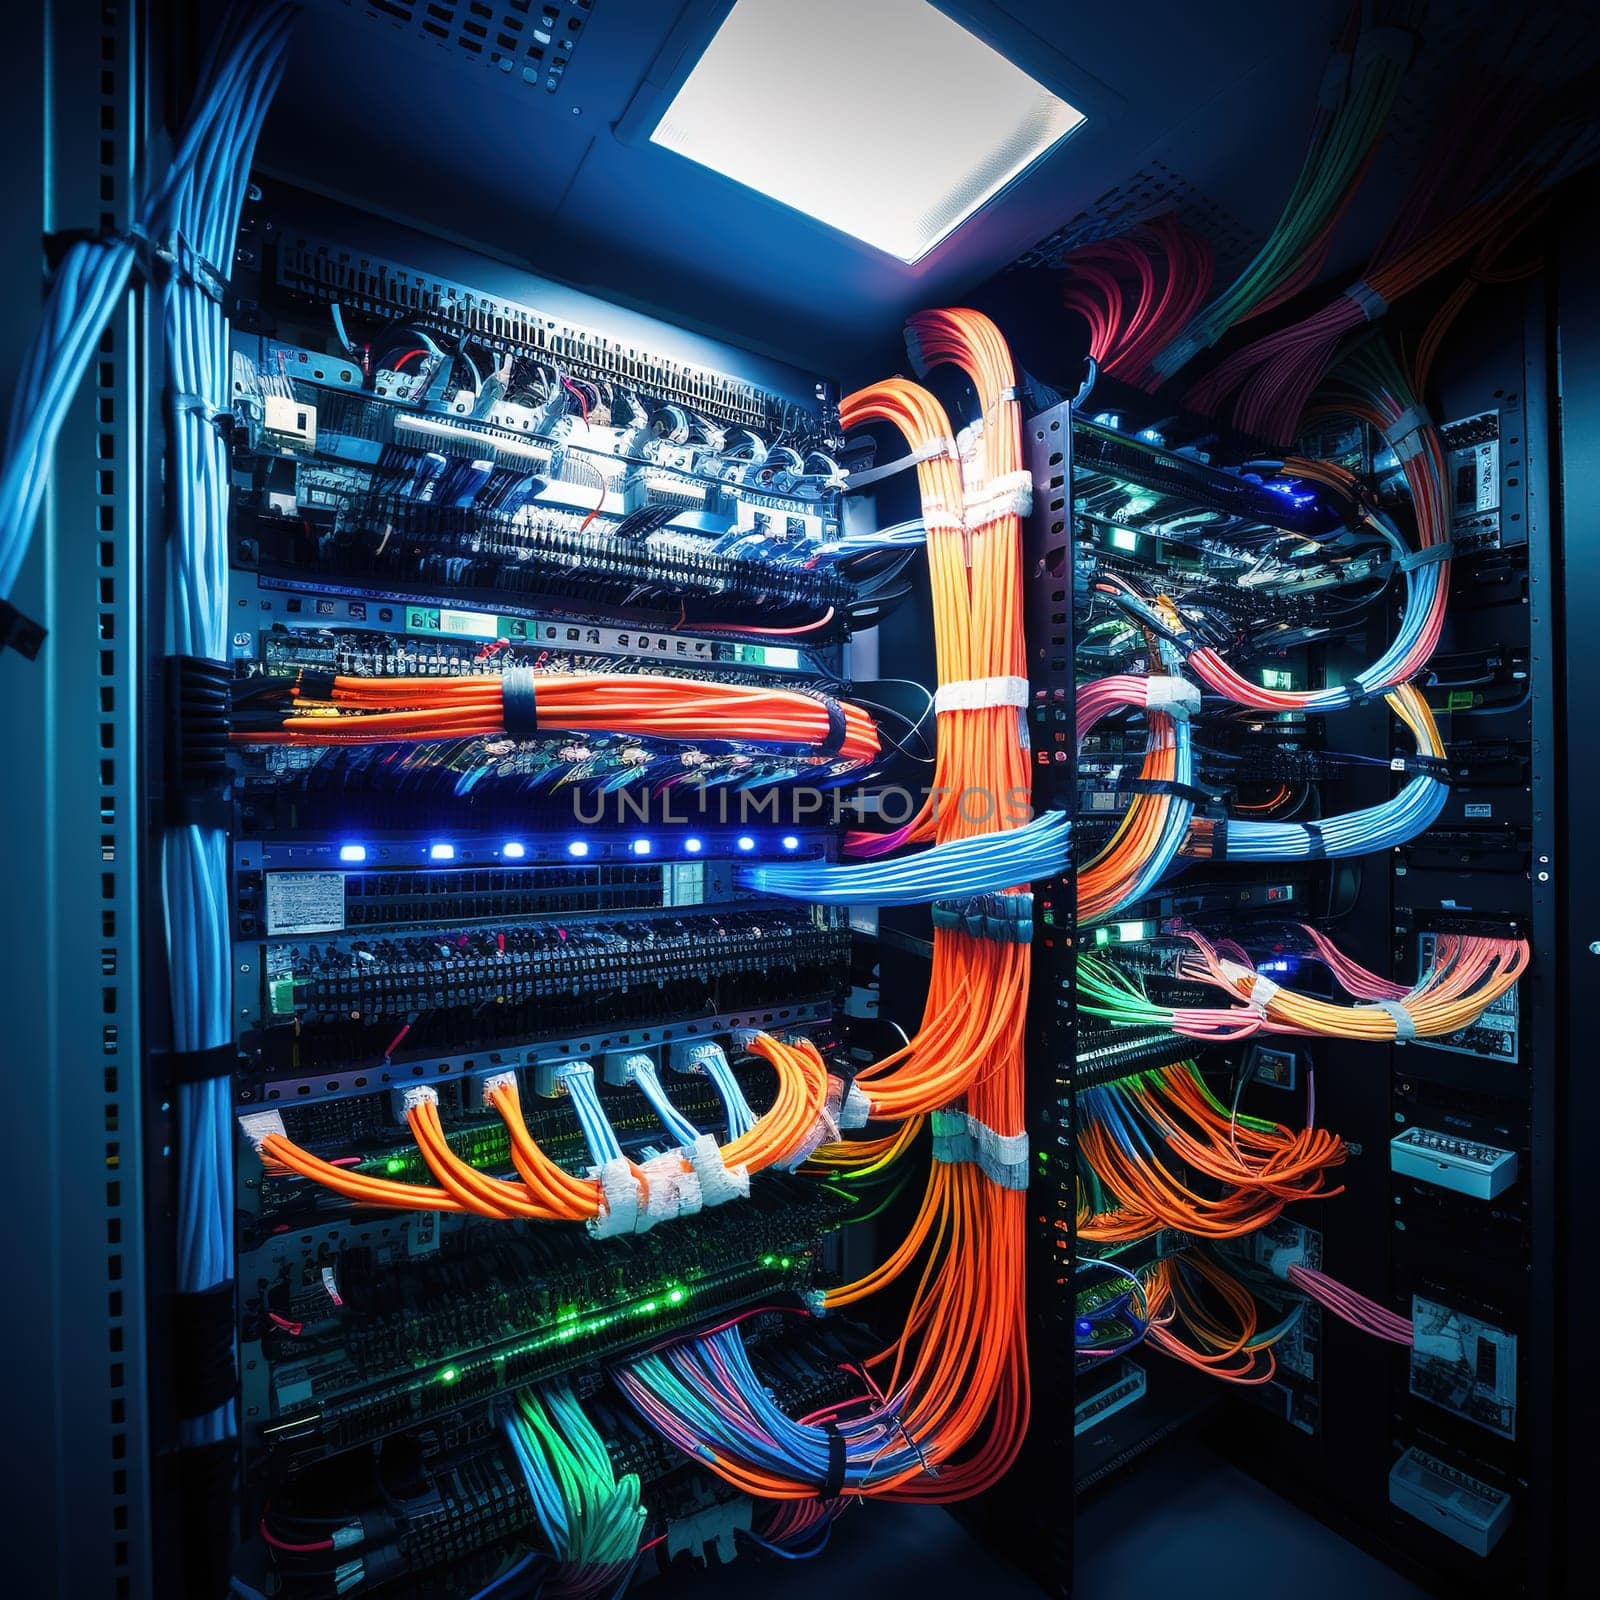 Modern IT server of a data center computer racks, IT network infrastracture concept